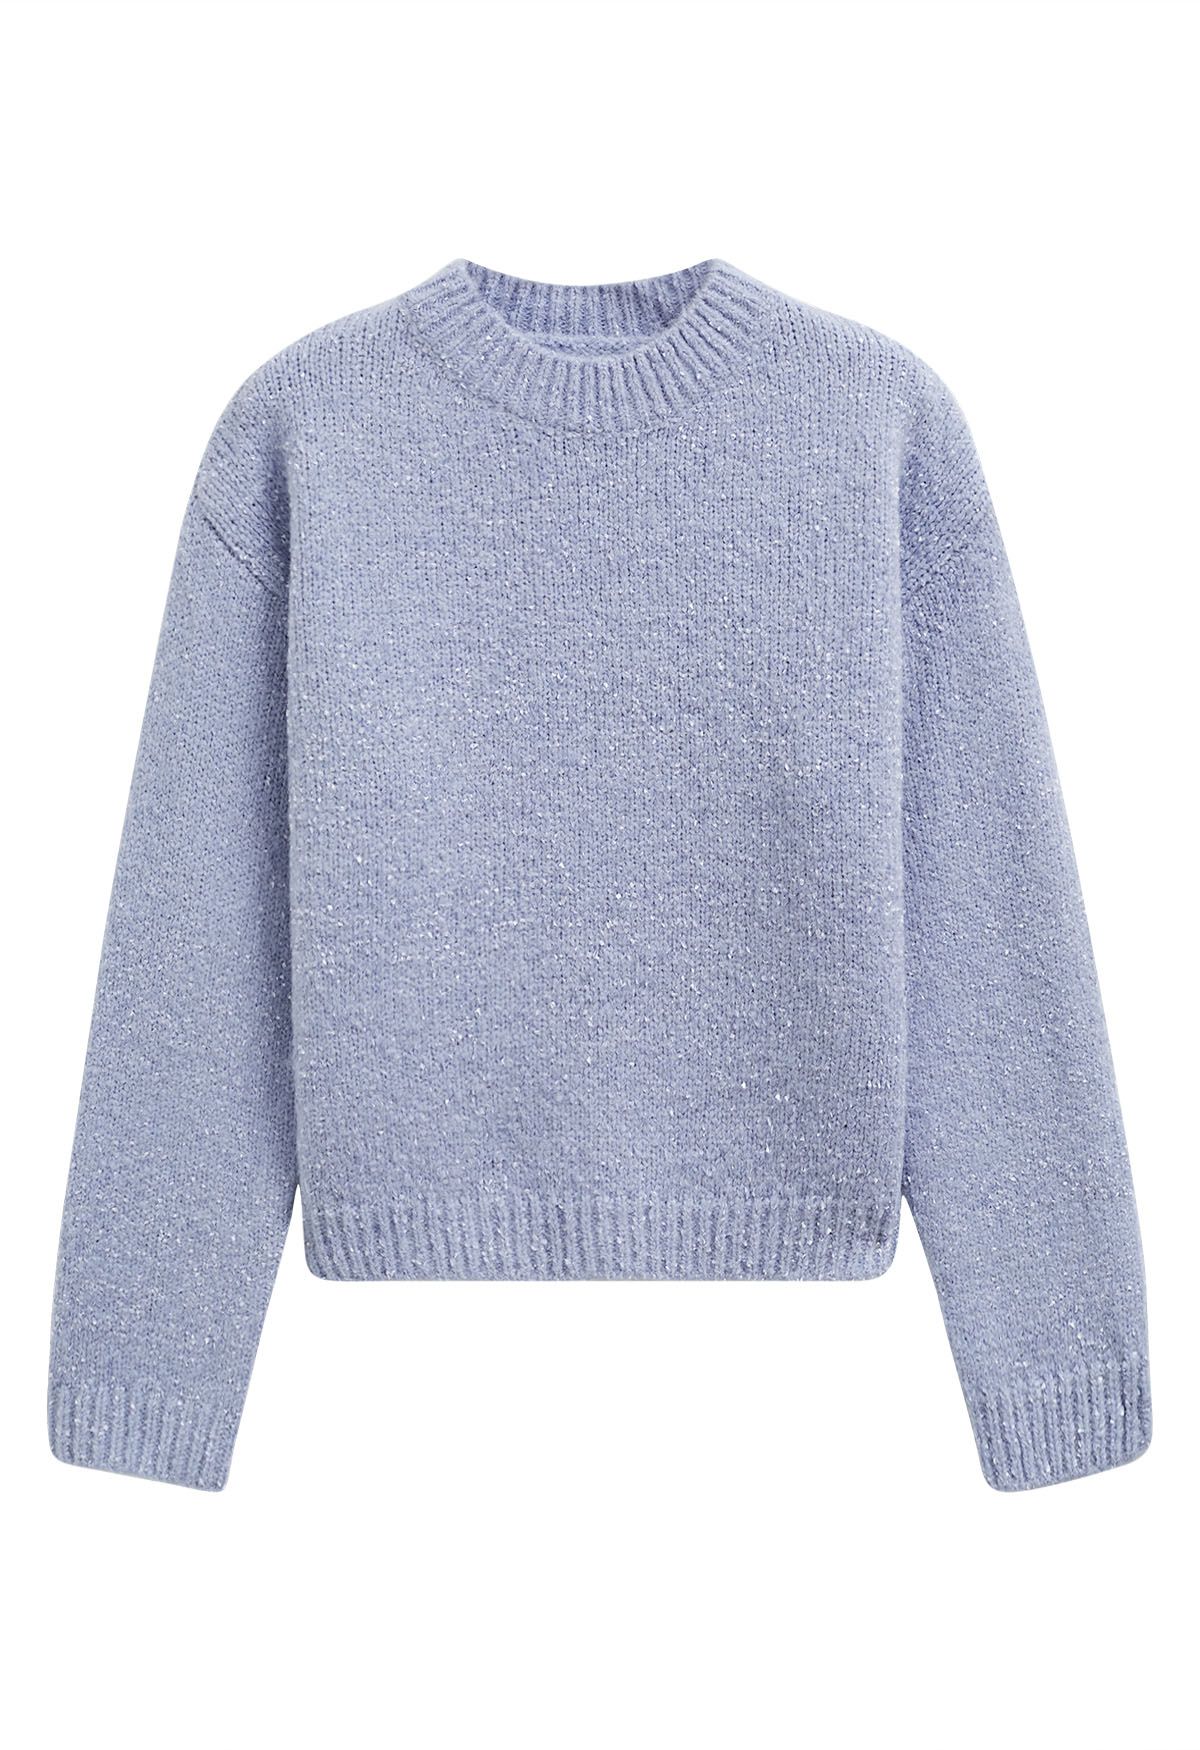 Drop Shoulder Rib Edge Knit Sweater in Blue